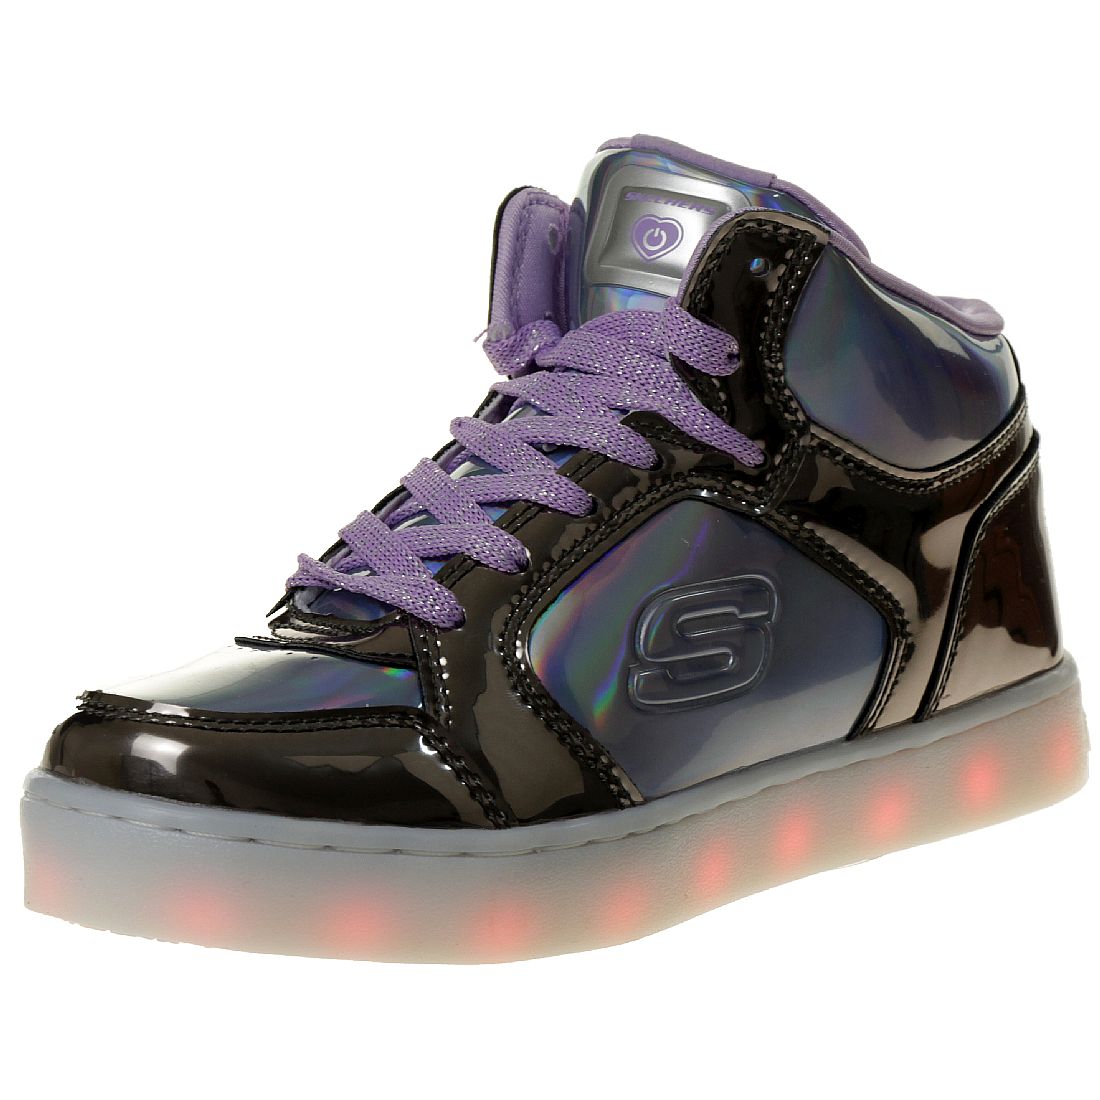 Skechers S LIGHTS: ENERGY LIGHTS SHINY BRIGHTS LED Sneakers Kinderschuhe Blinkschuhe